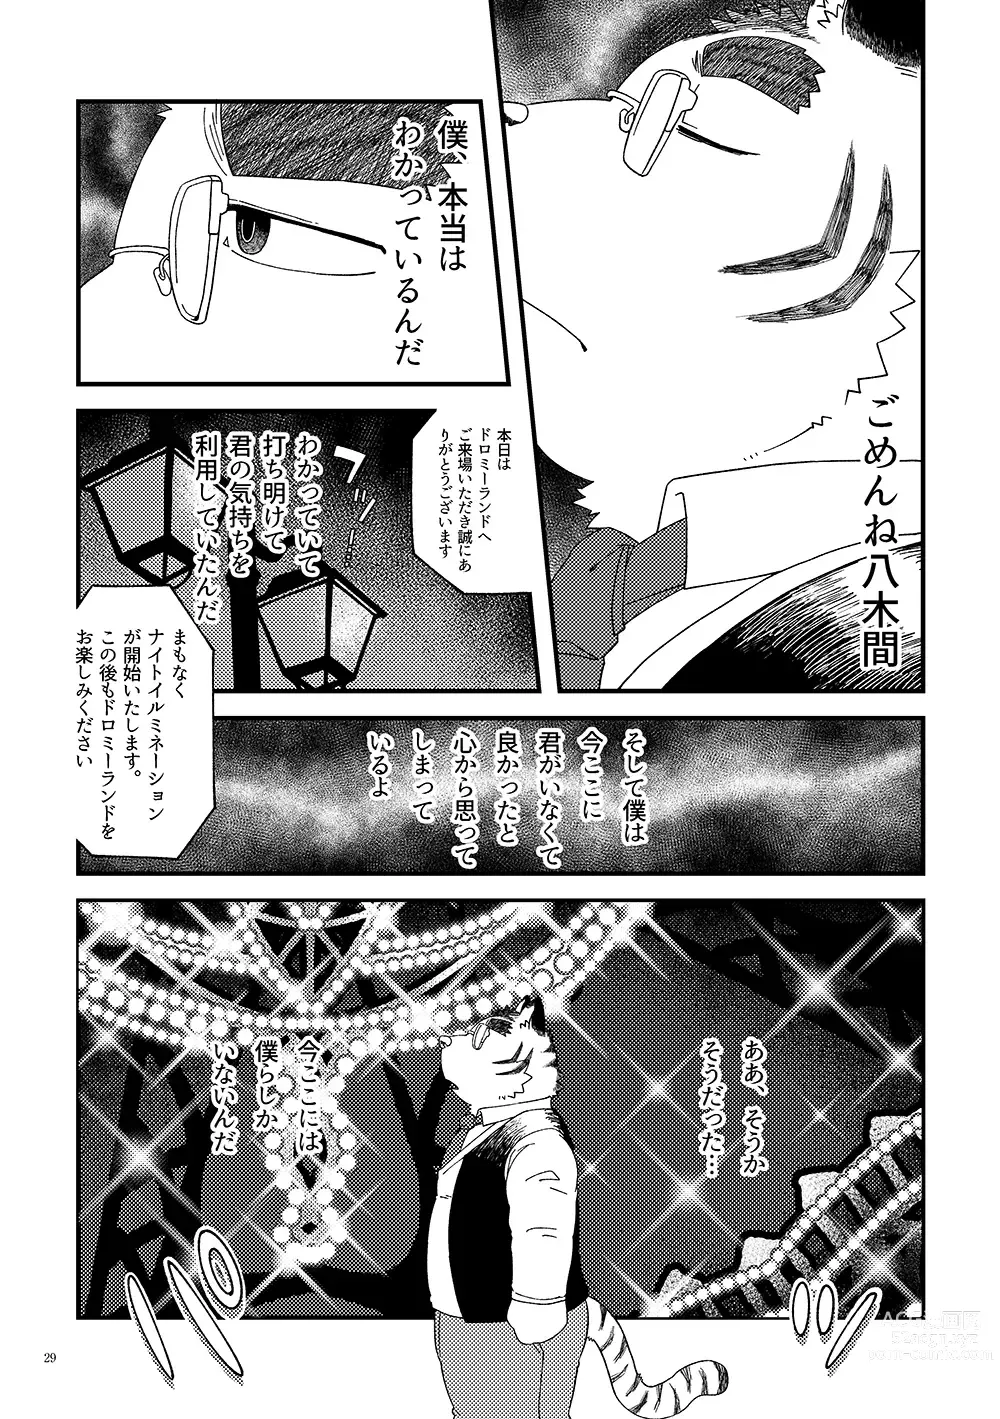 Page 30 of doujinshi Sanbunnoichi Vol 2: Datte sukidakara.